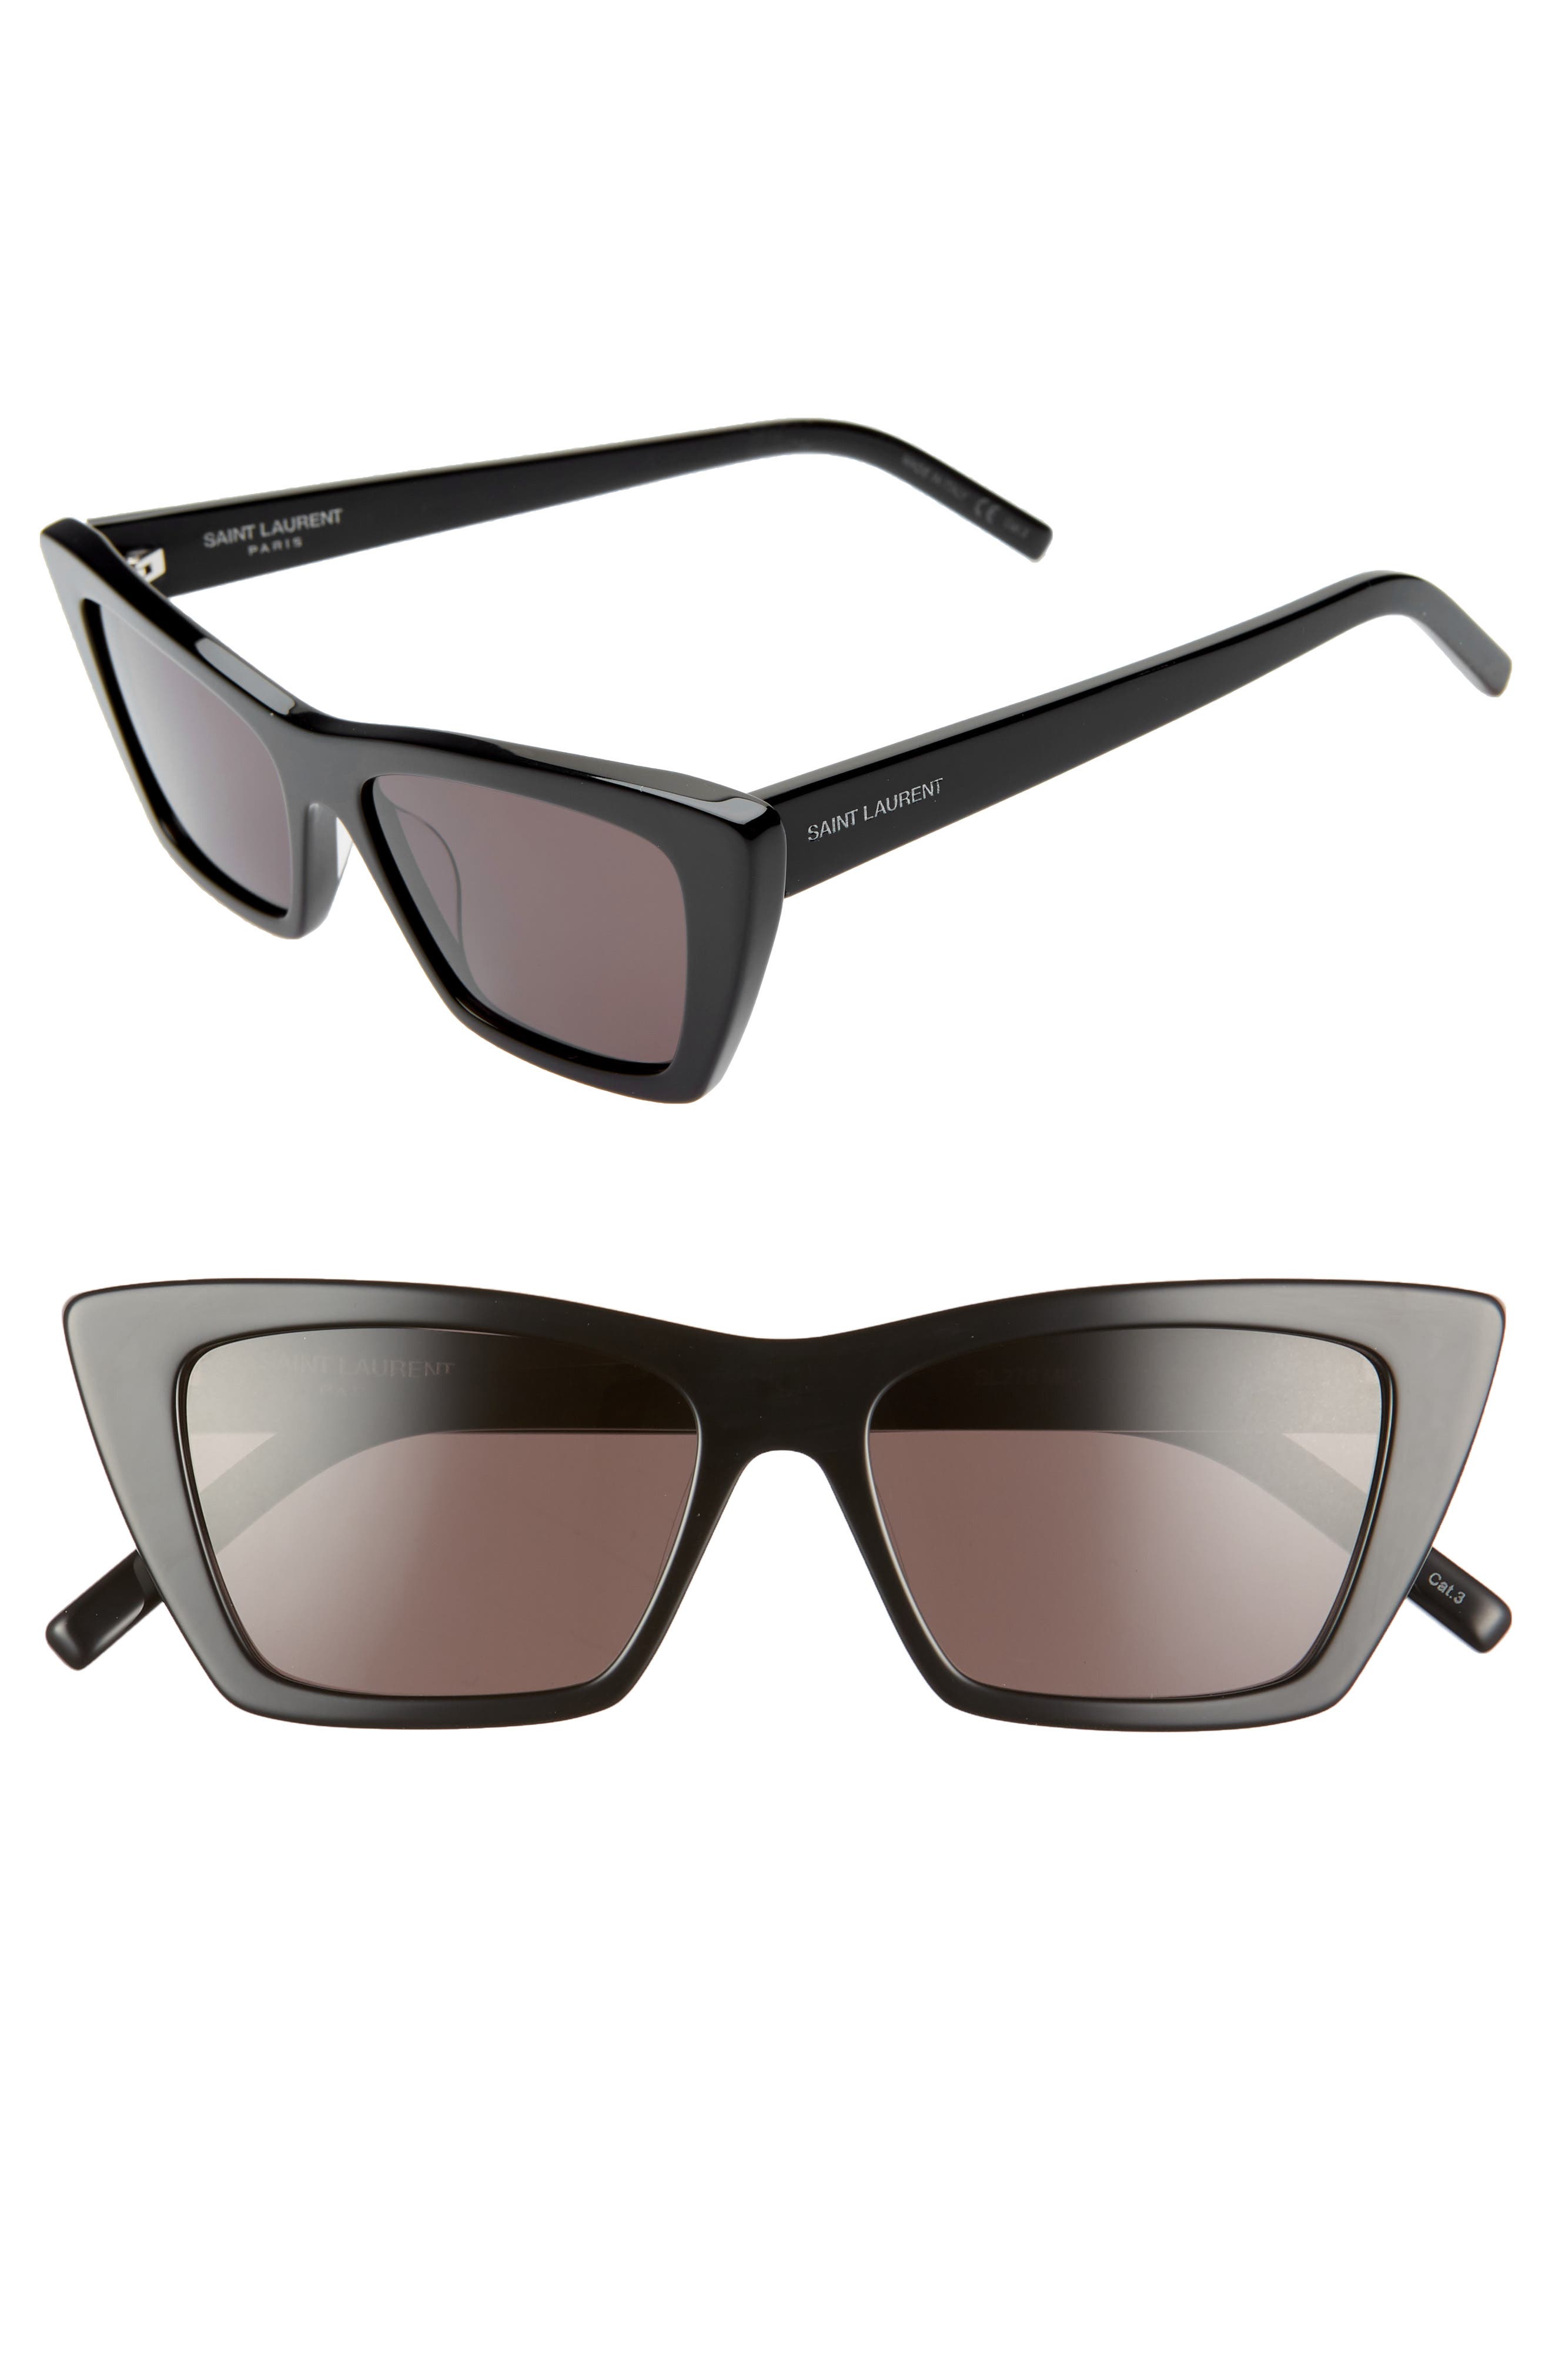 Womens Sunglasses Saint Laurent Sunglasses - Save 31% Black Saint Laurent Metal Sunglasses in Black Black Black 